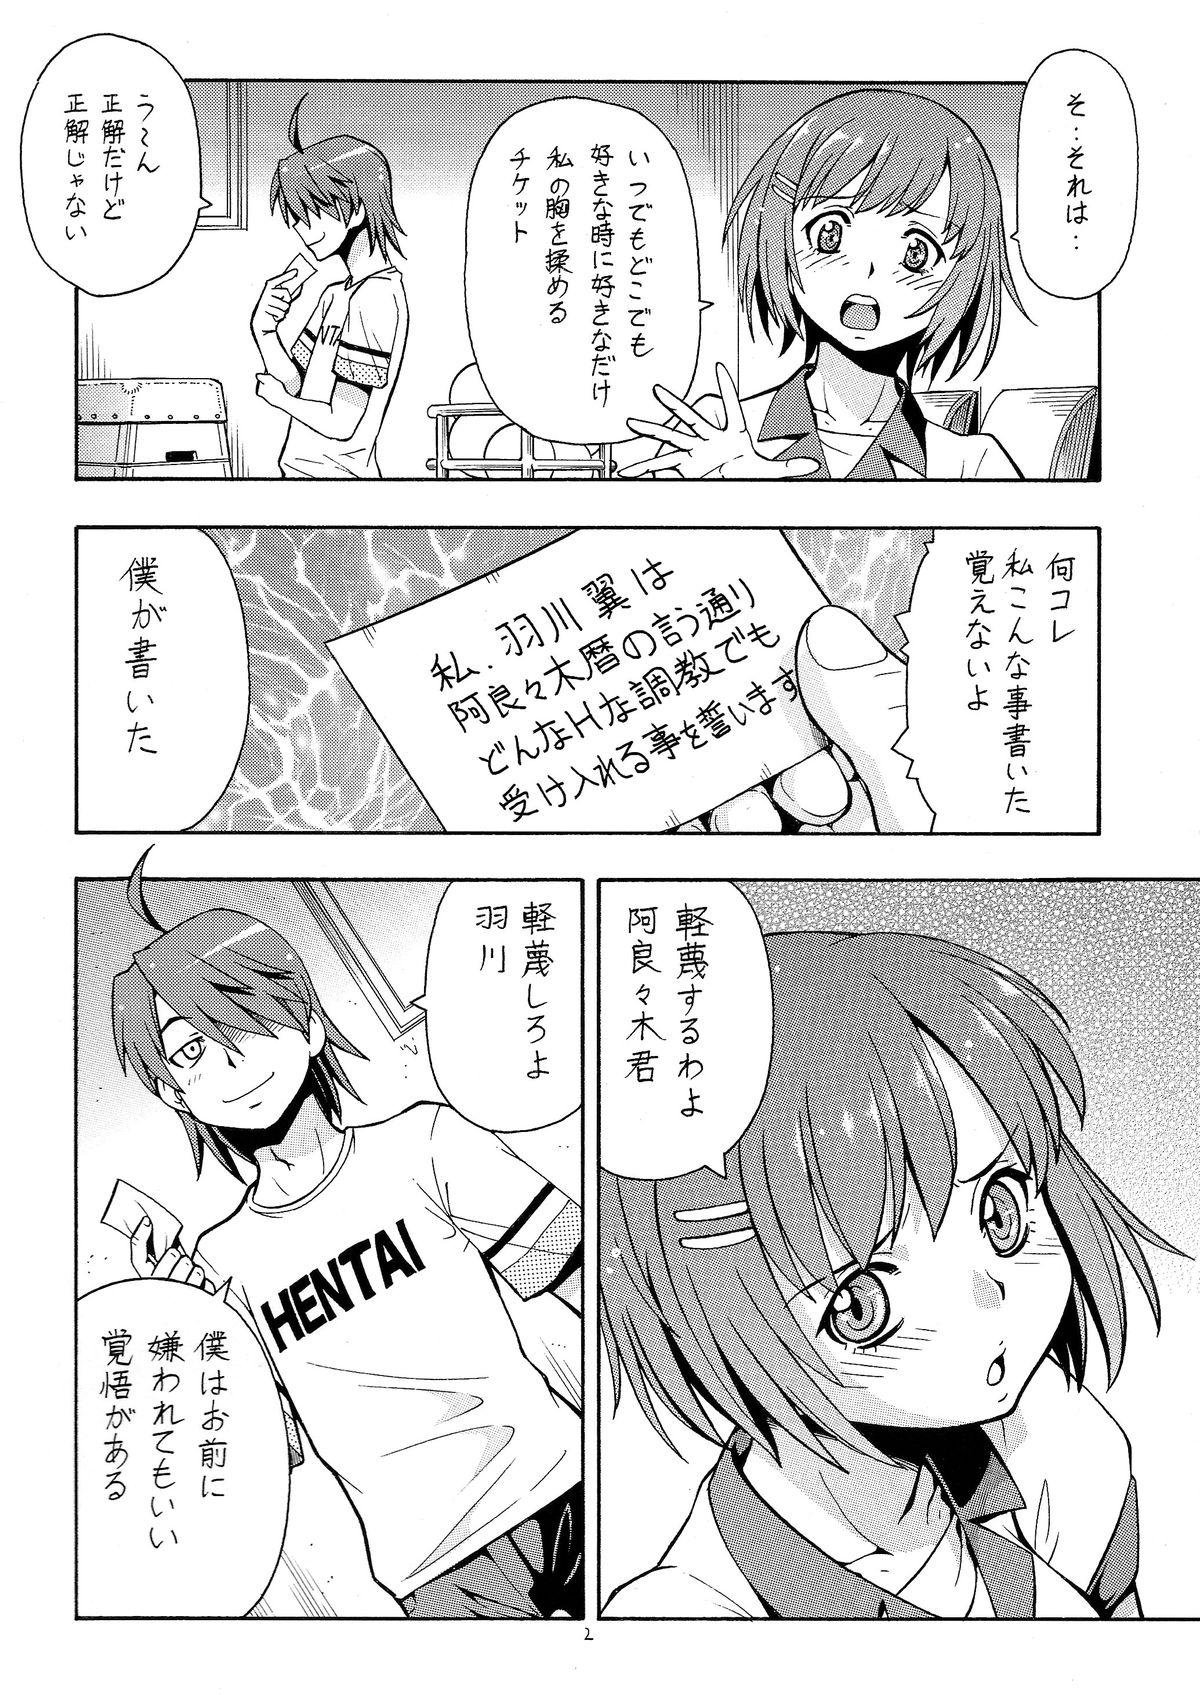 Hard Fucking Hito ni Hakanai to Kaite "Araragi" to Yomu 7 - Bakemonogatari Amatuer - Page 4